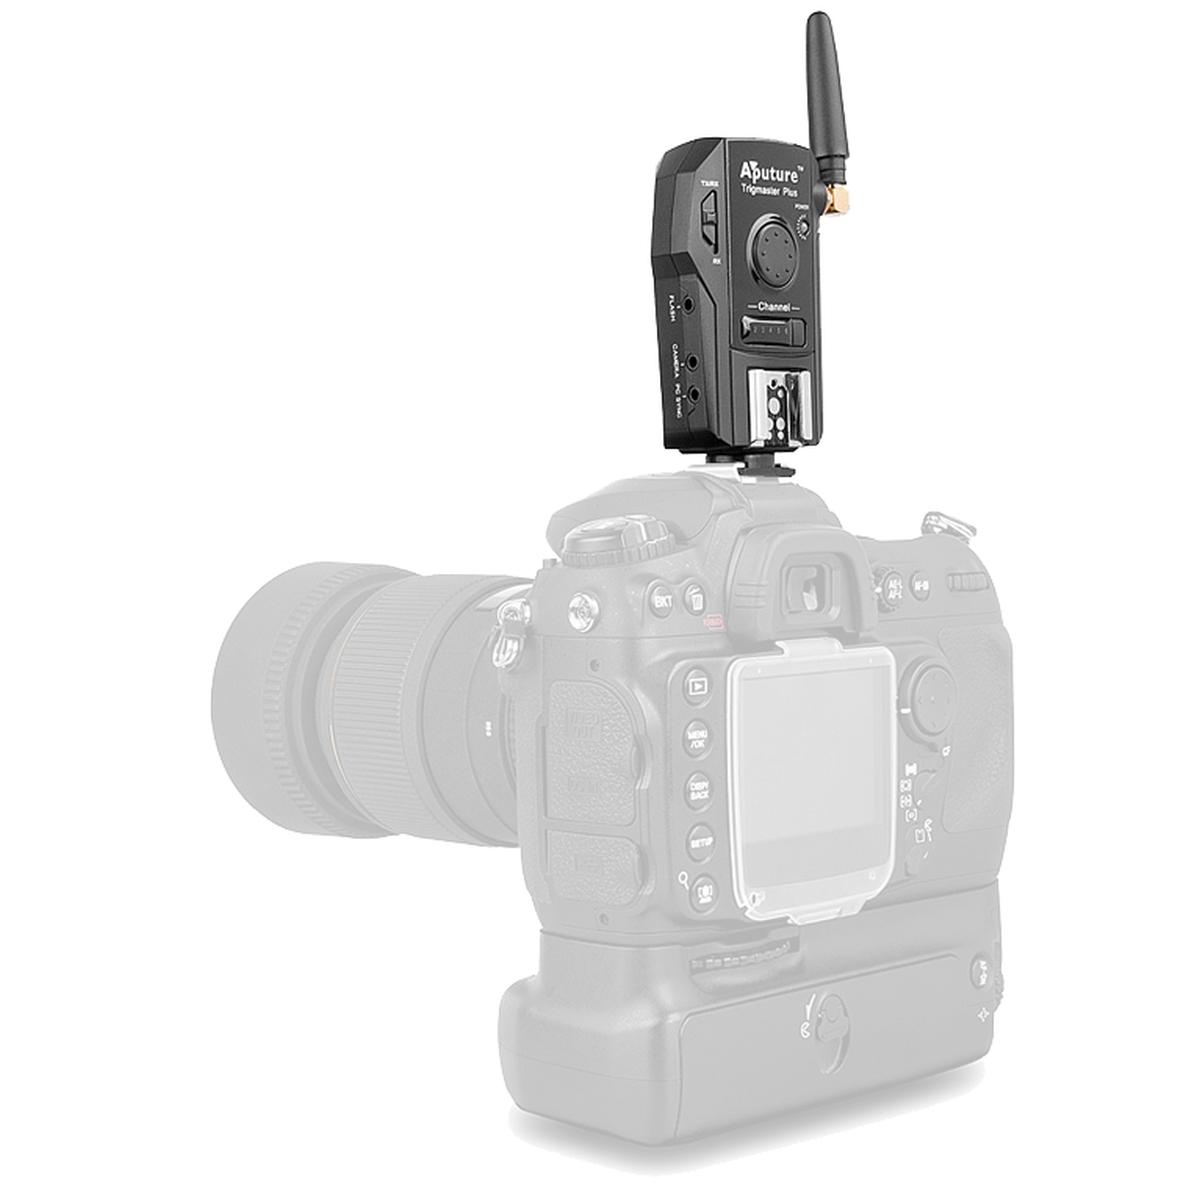 Aputure Trigmaster Plus 2.4G Trigger TXN Nikon 1N